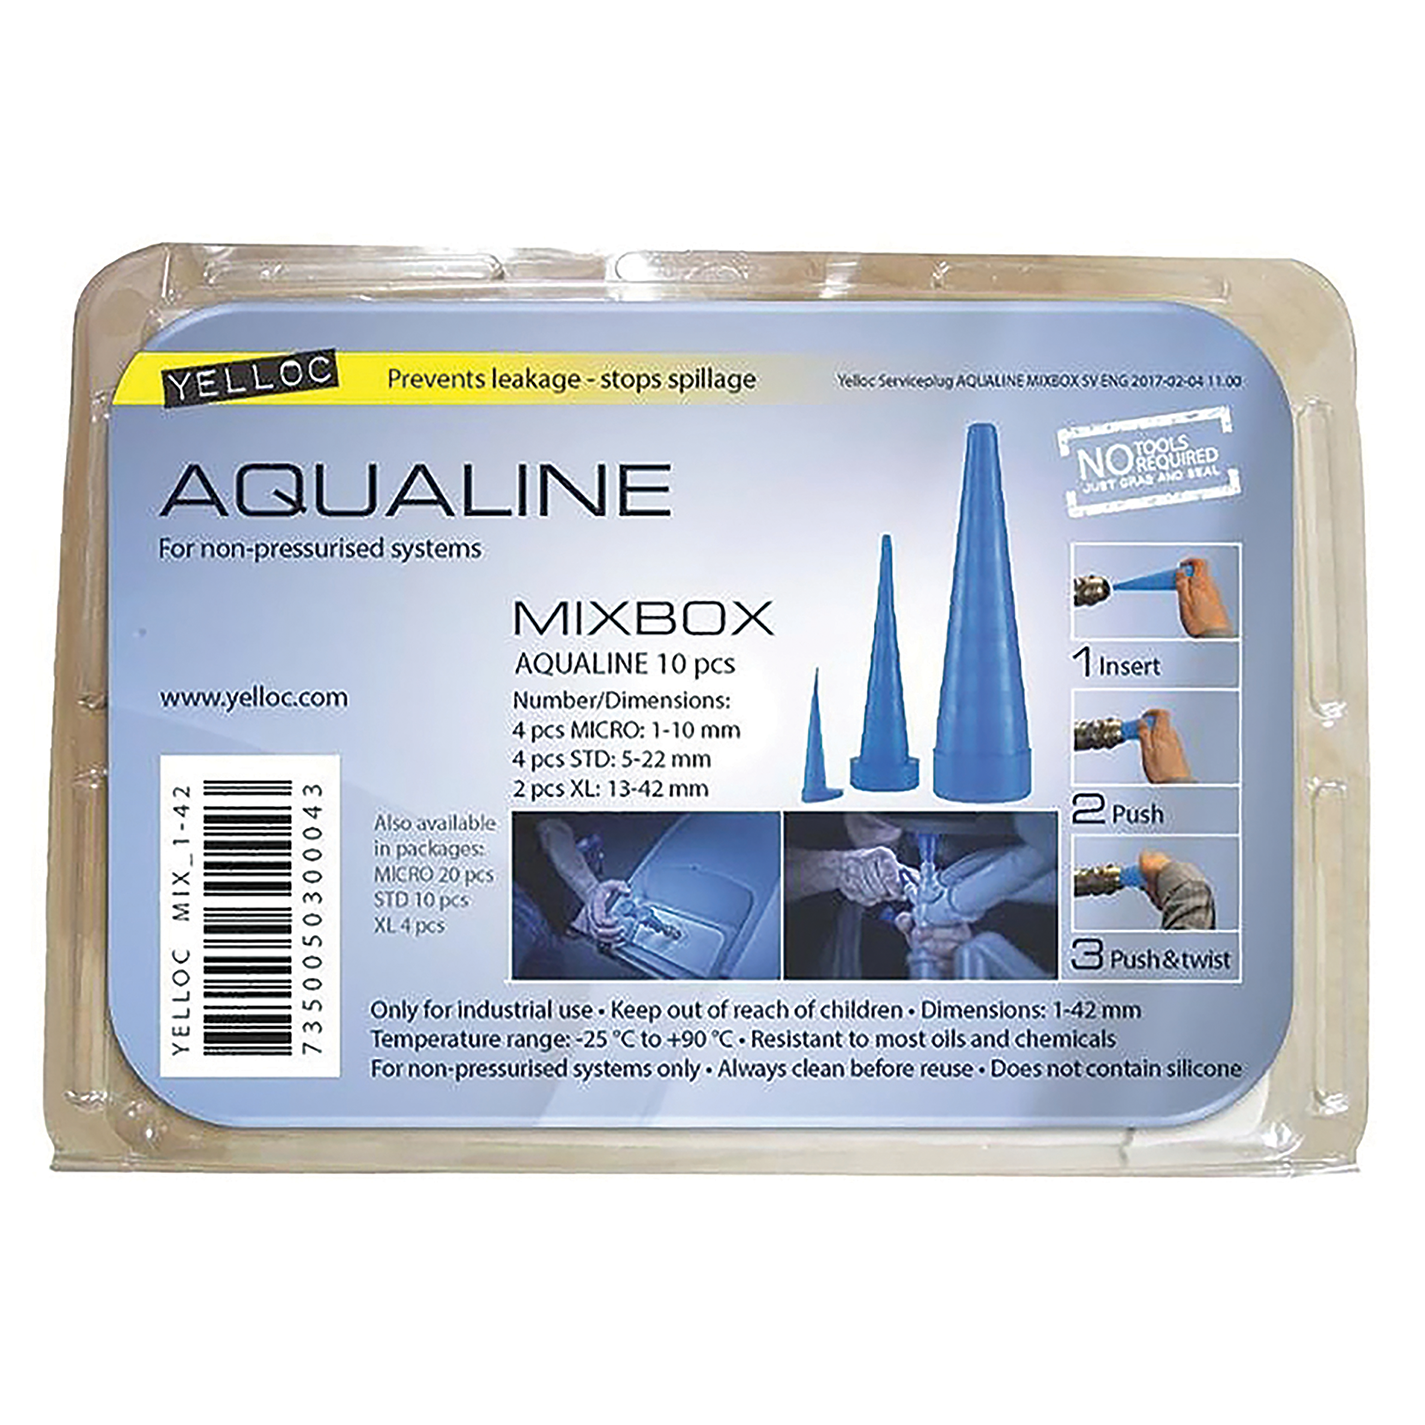 Aqualine 10 Piece Mixbox